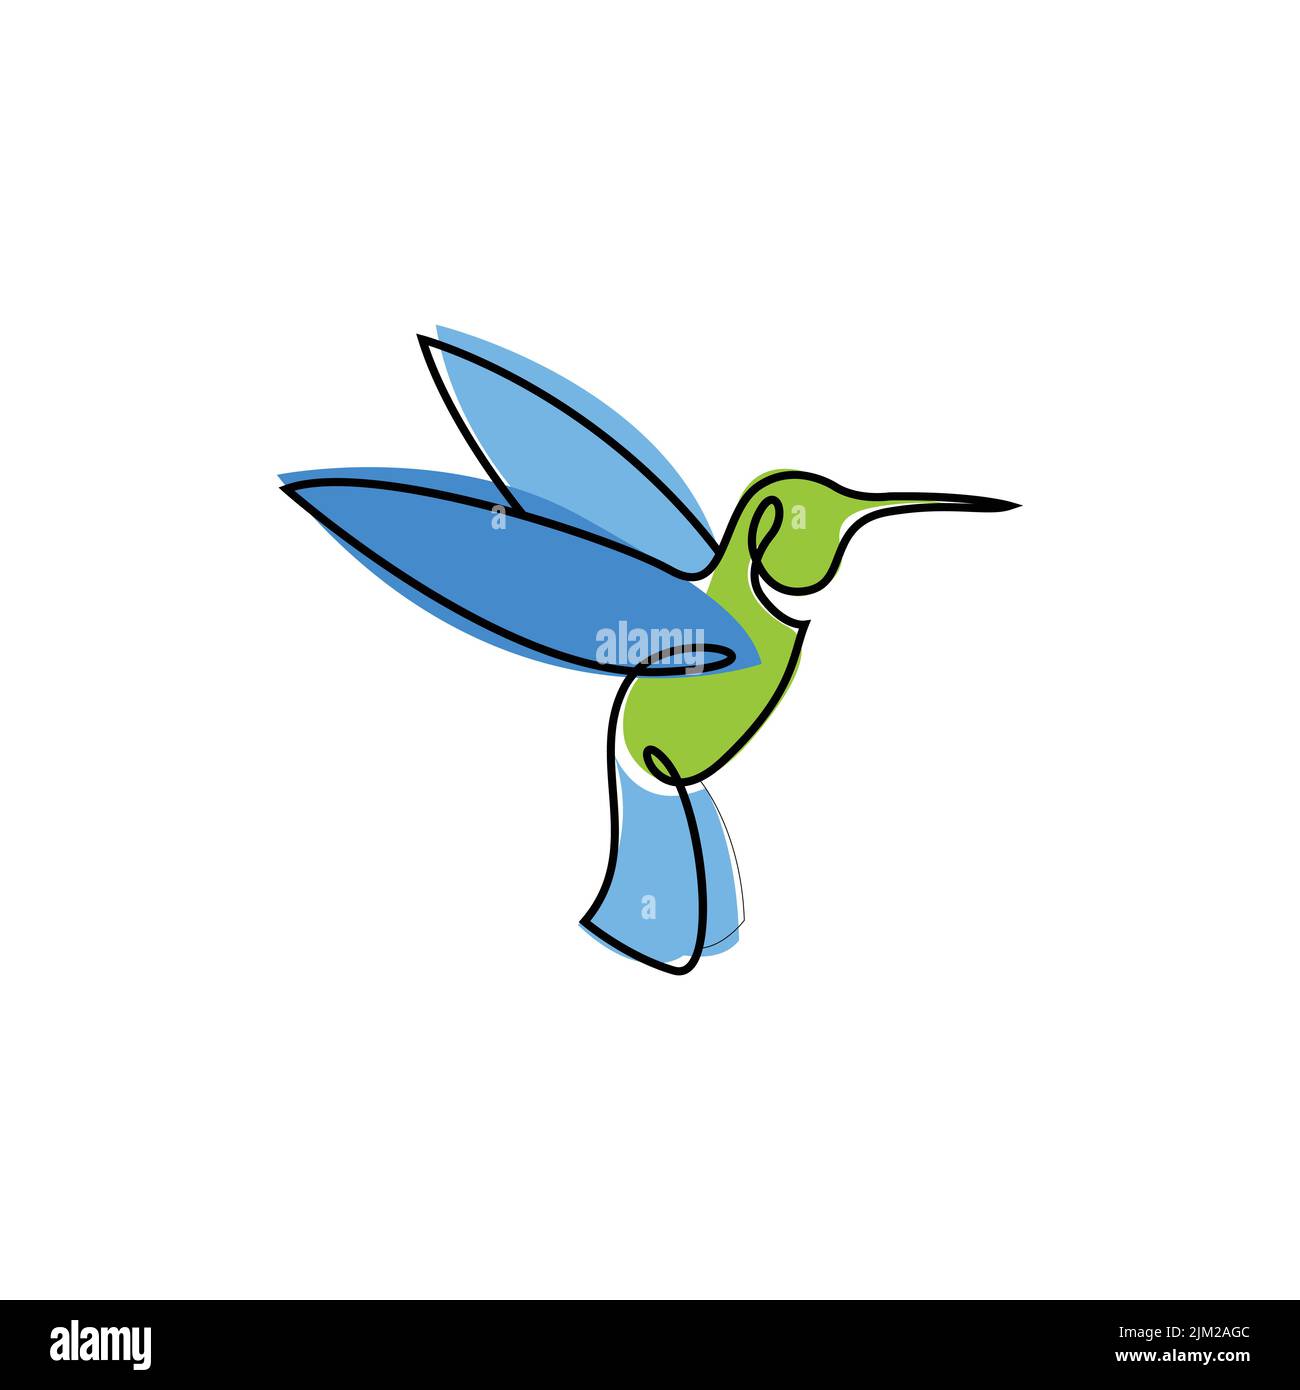 Vectores de colibrí fotografías e imágenes de alta resolución - Alamy